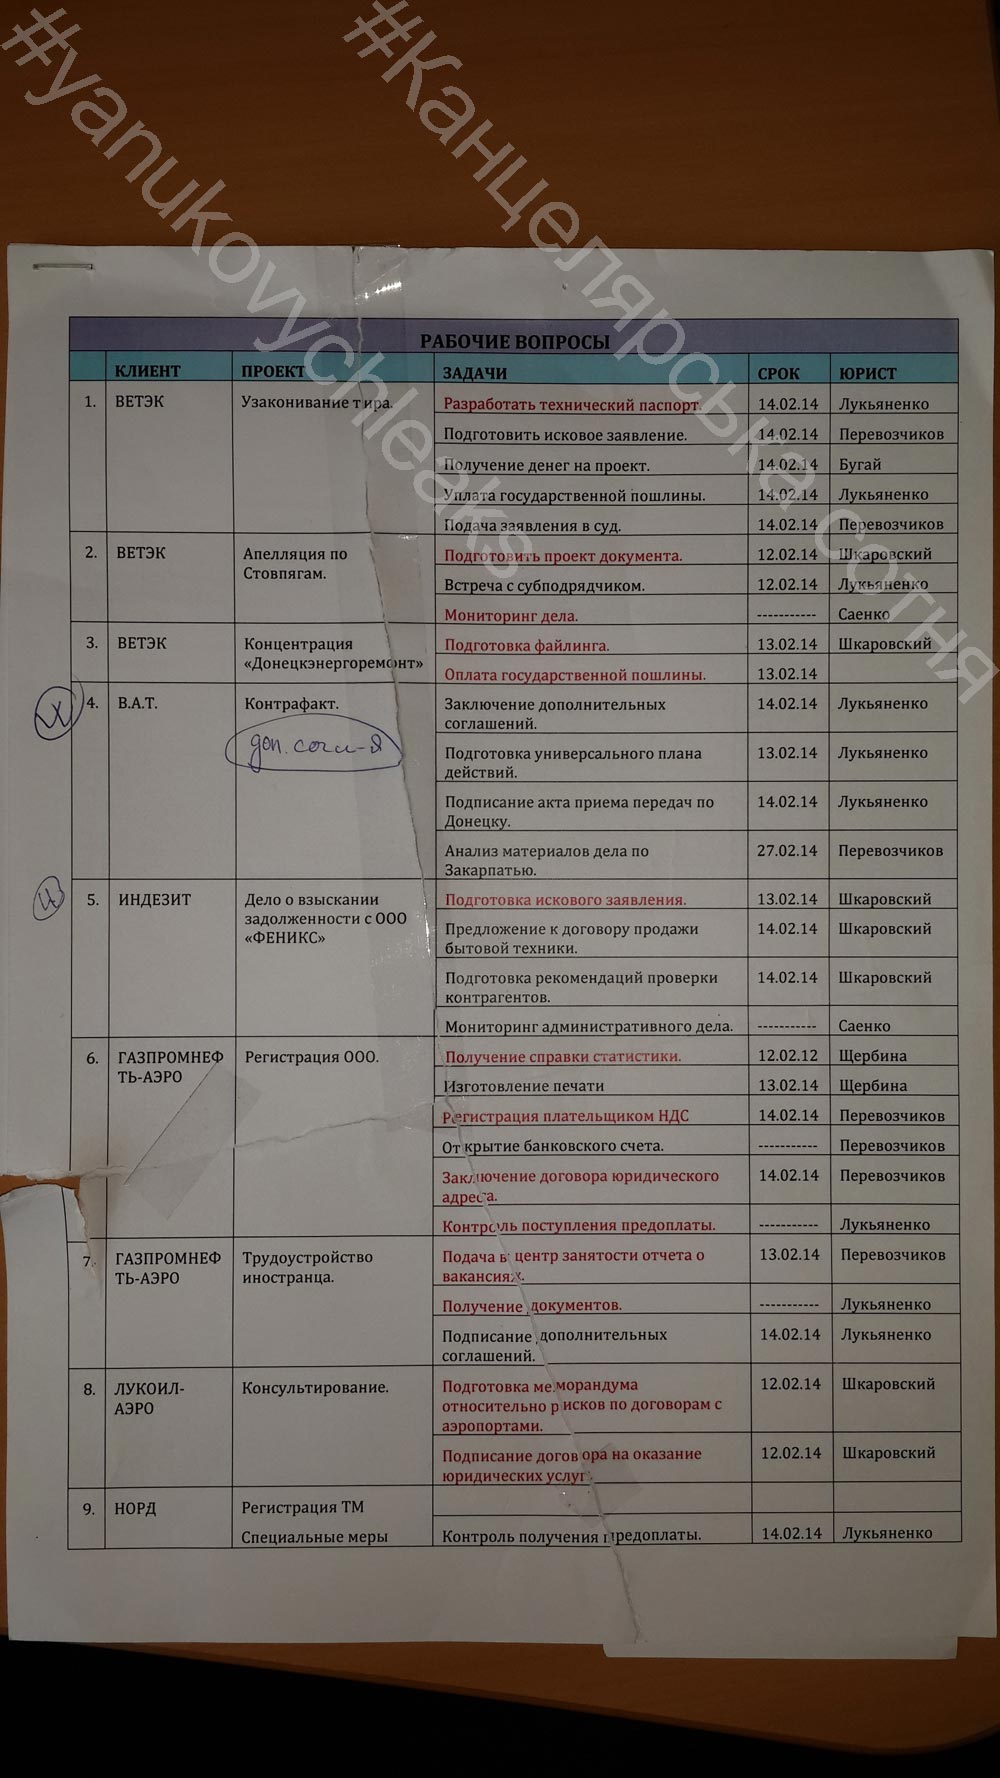 yanukovych-leaks/Kurchenkos-Lawyers1.jpg